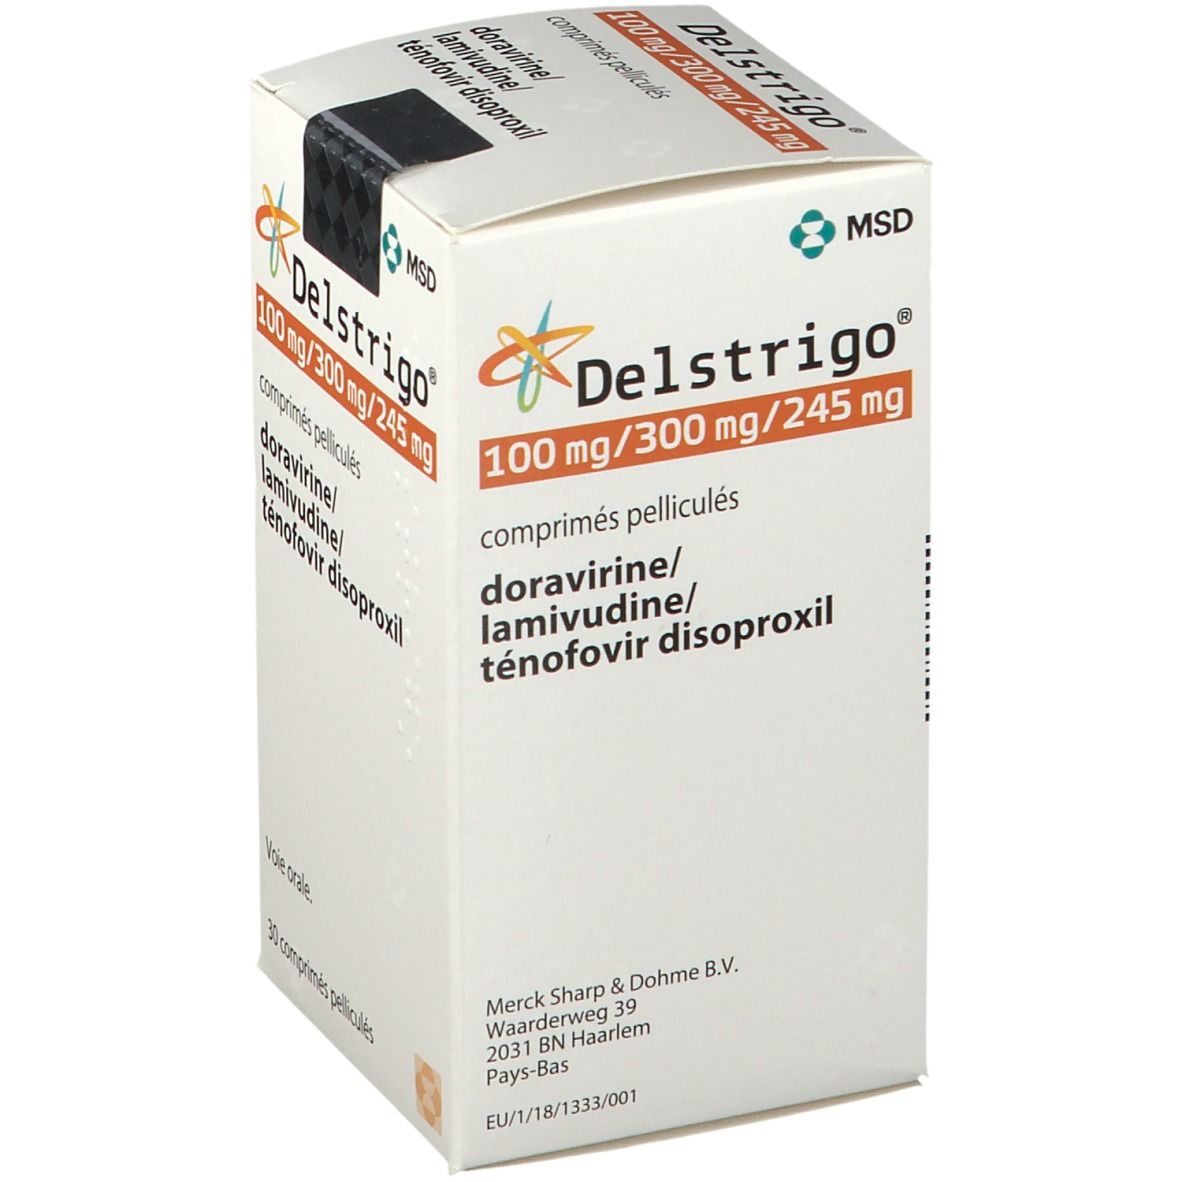 Delstrigo® 100 mg/ 300 mg/ 245 mg